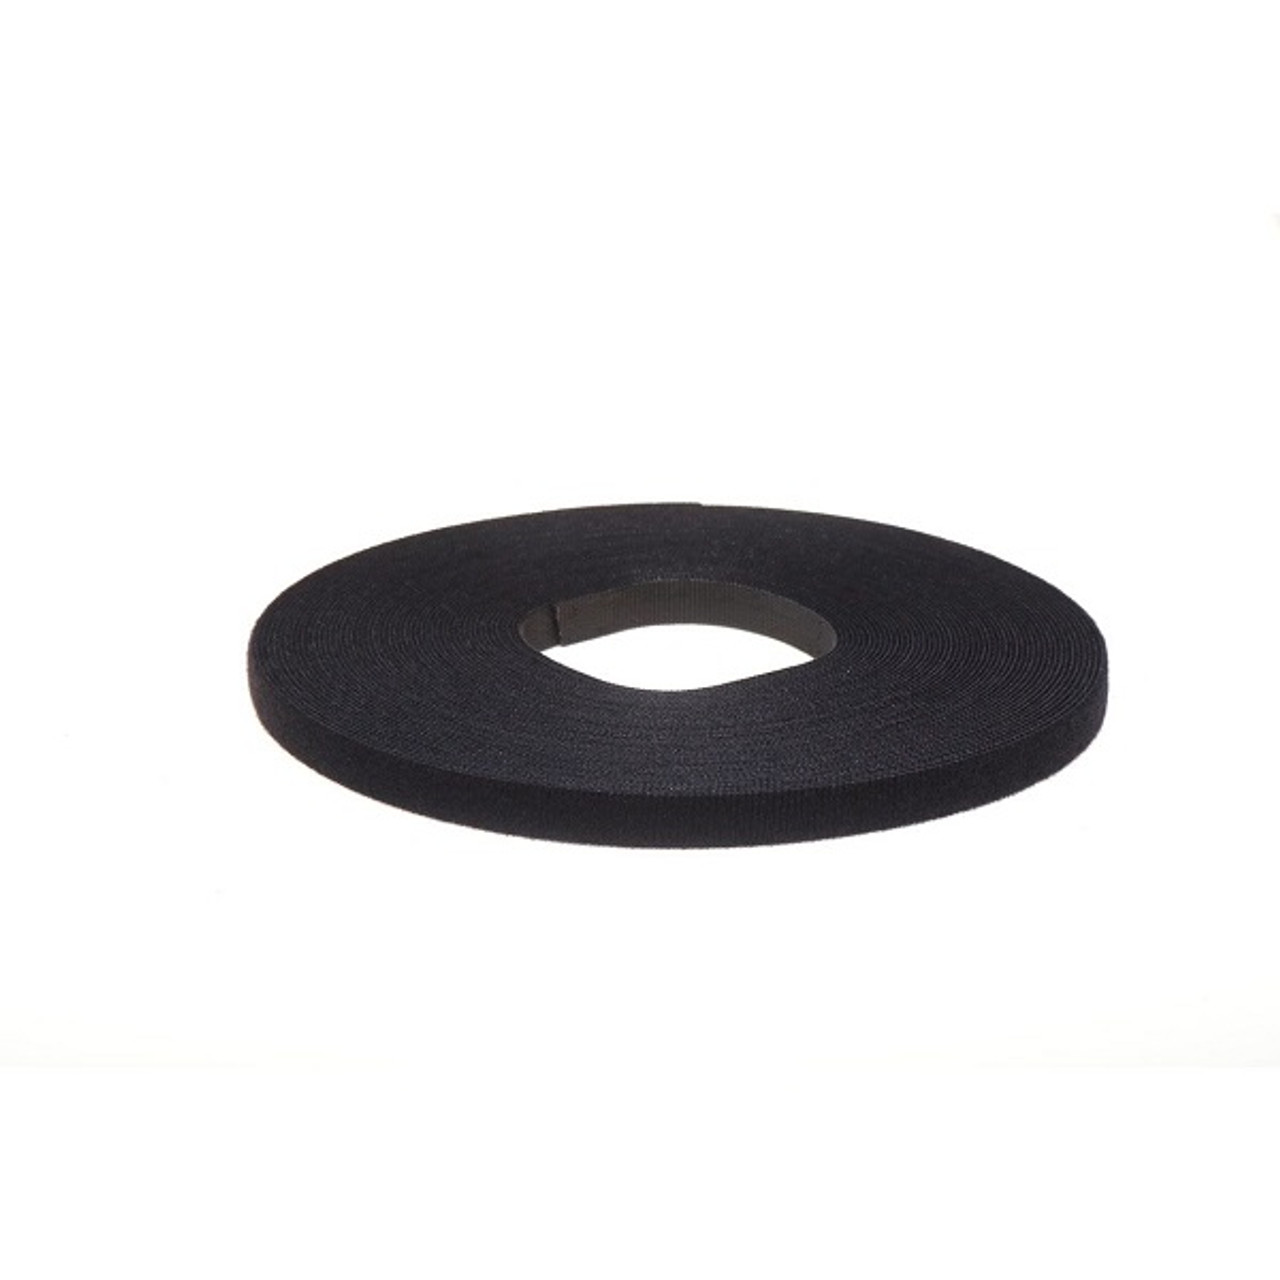 Vardhman Velcro Tape Roll, 25 Mts * 25 Mm ( 1  ) Width , Colour Black  Sew-on Velcro Price in India - Buy Vardhman Velcro Tape Roll, 25 Mts * 25